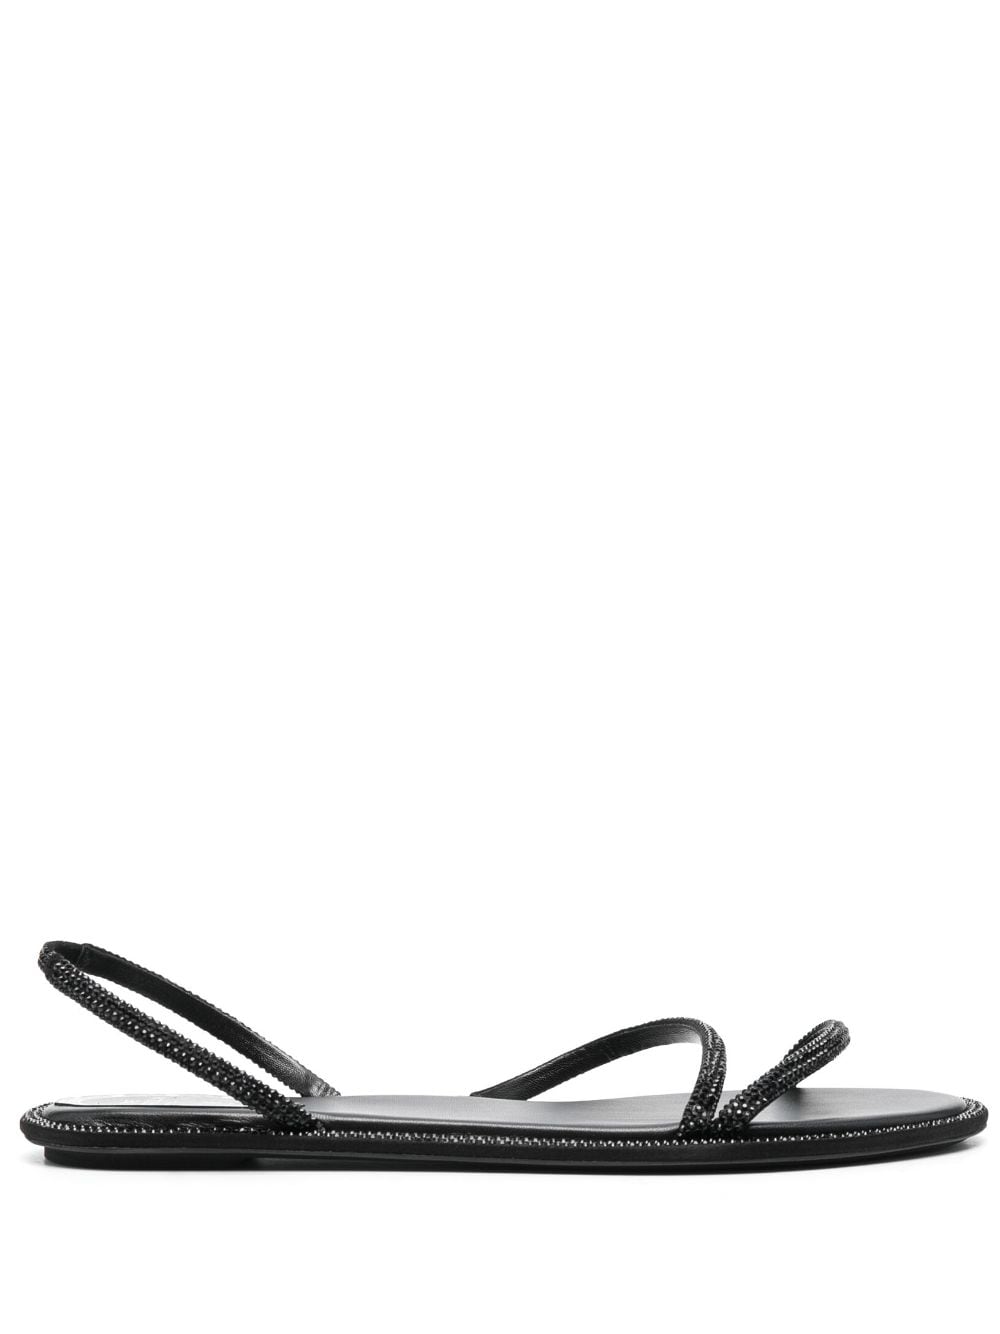 René Caovilla crystal-embellished slingback sandals - Black von René Caovilla